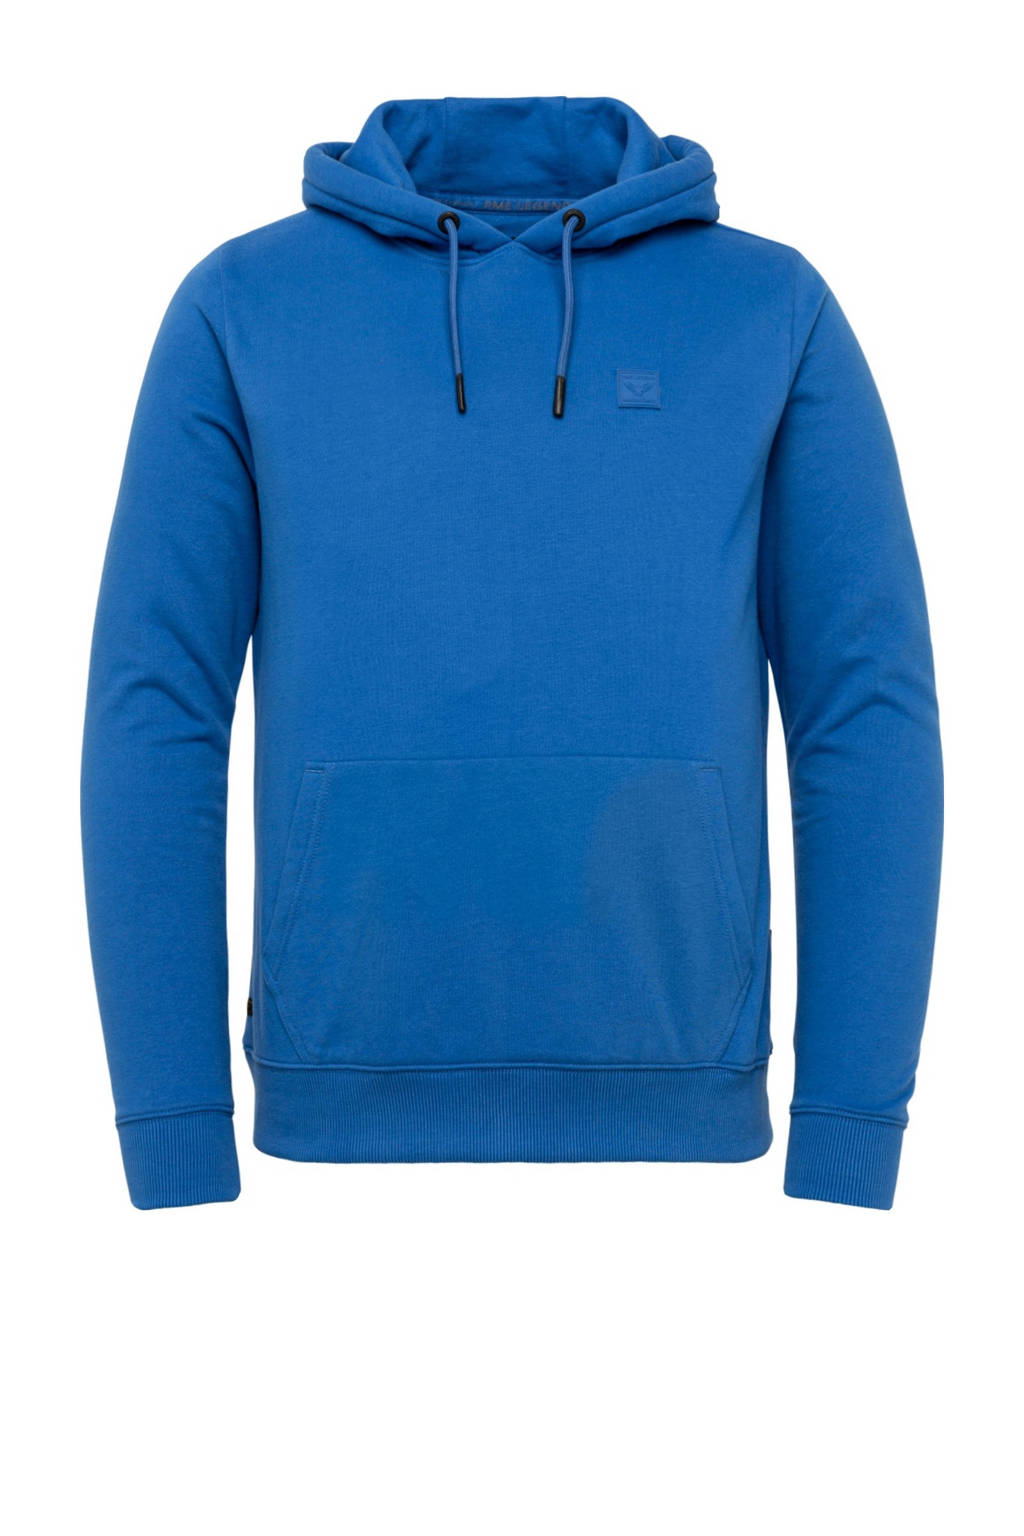 PME Legend hoodie 5075 blue